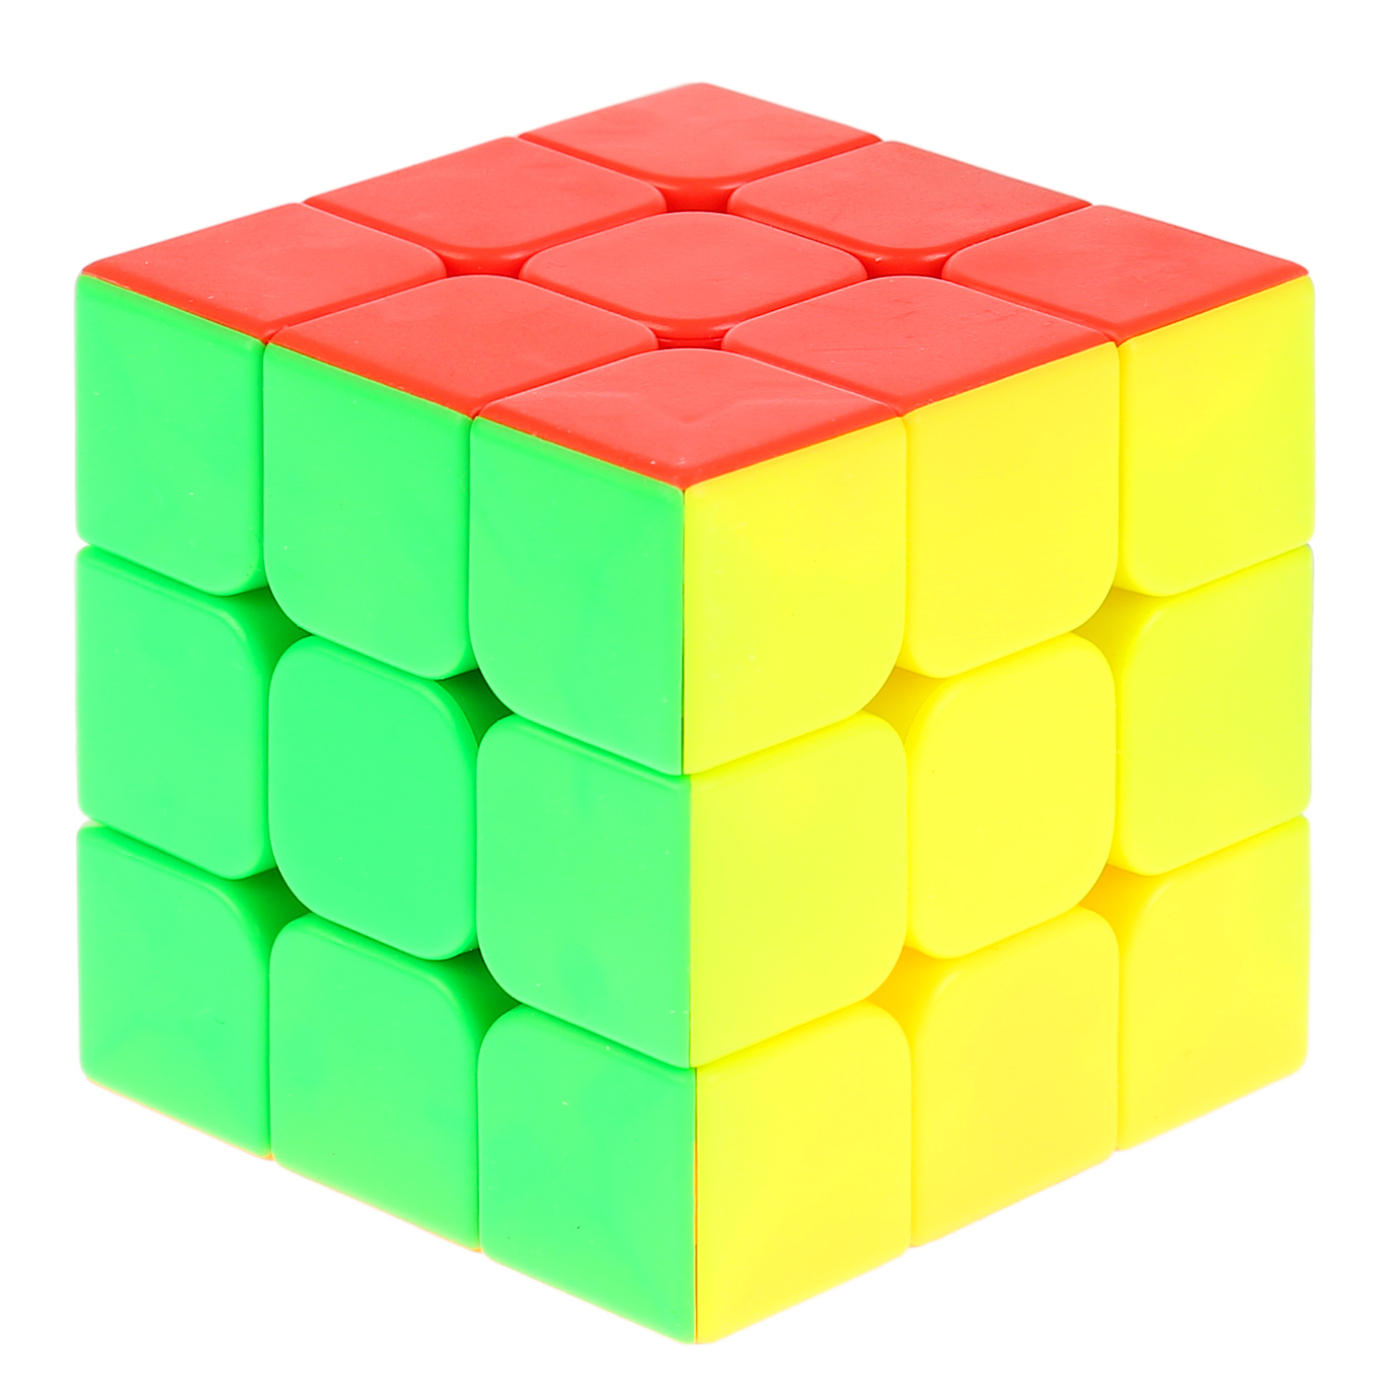 Кубик 3 3 11. Кубик Рубика 3х3. Головоломка кубиккубс zy774015. MOYU MOFANG JIAOSHI. Логический куб кубик Рубика 2х3 диагональный.